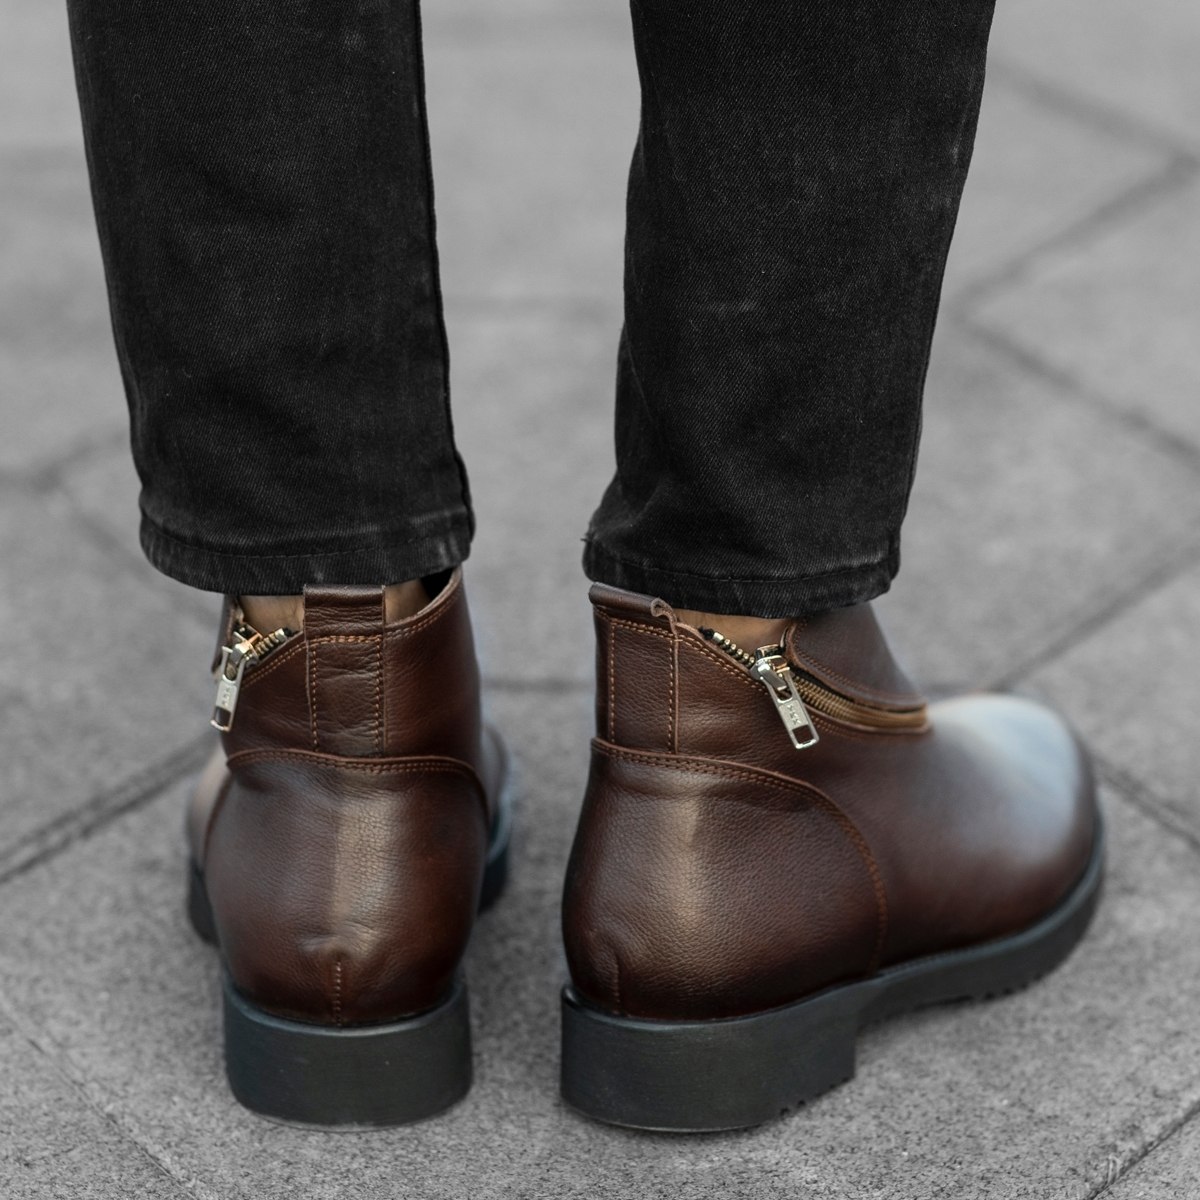 Herren Lederstiefel Chelsea Boots mit Reissverschluss in braun | Martin Valen